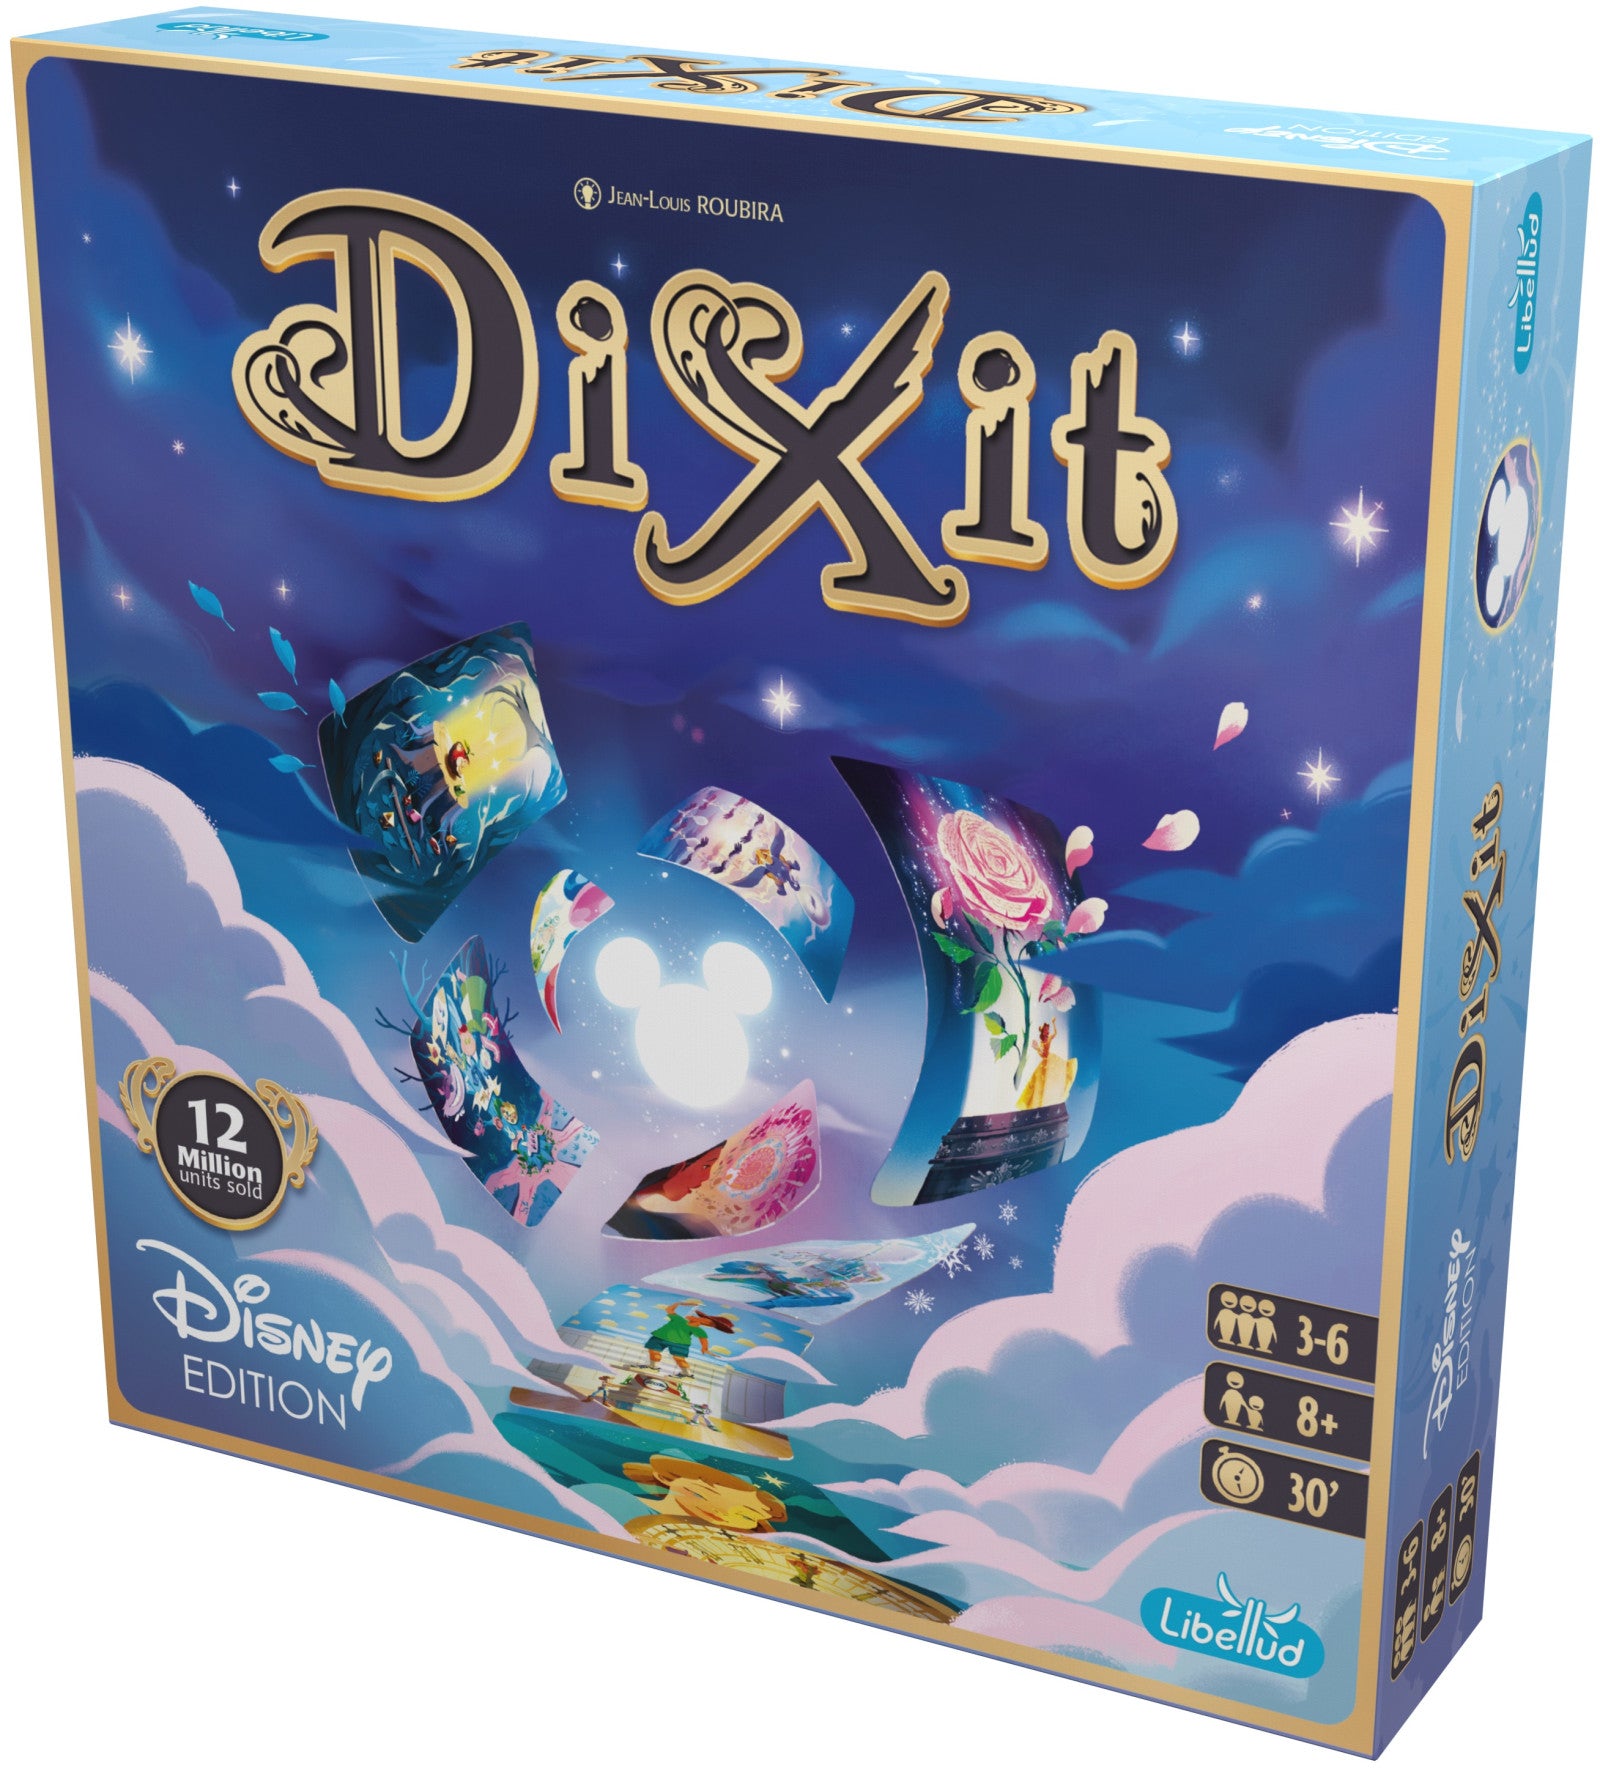 Disney Edition of Dixit